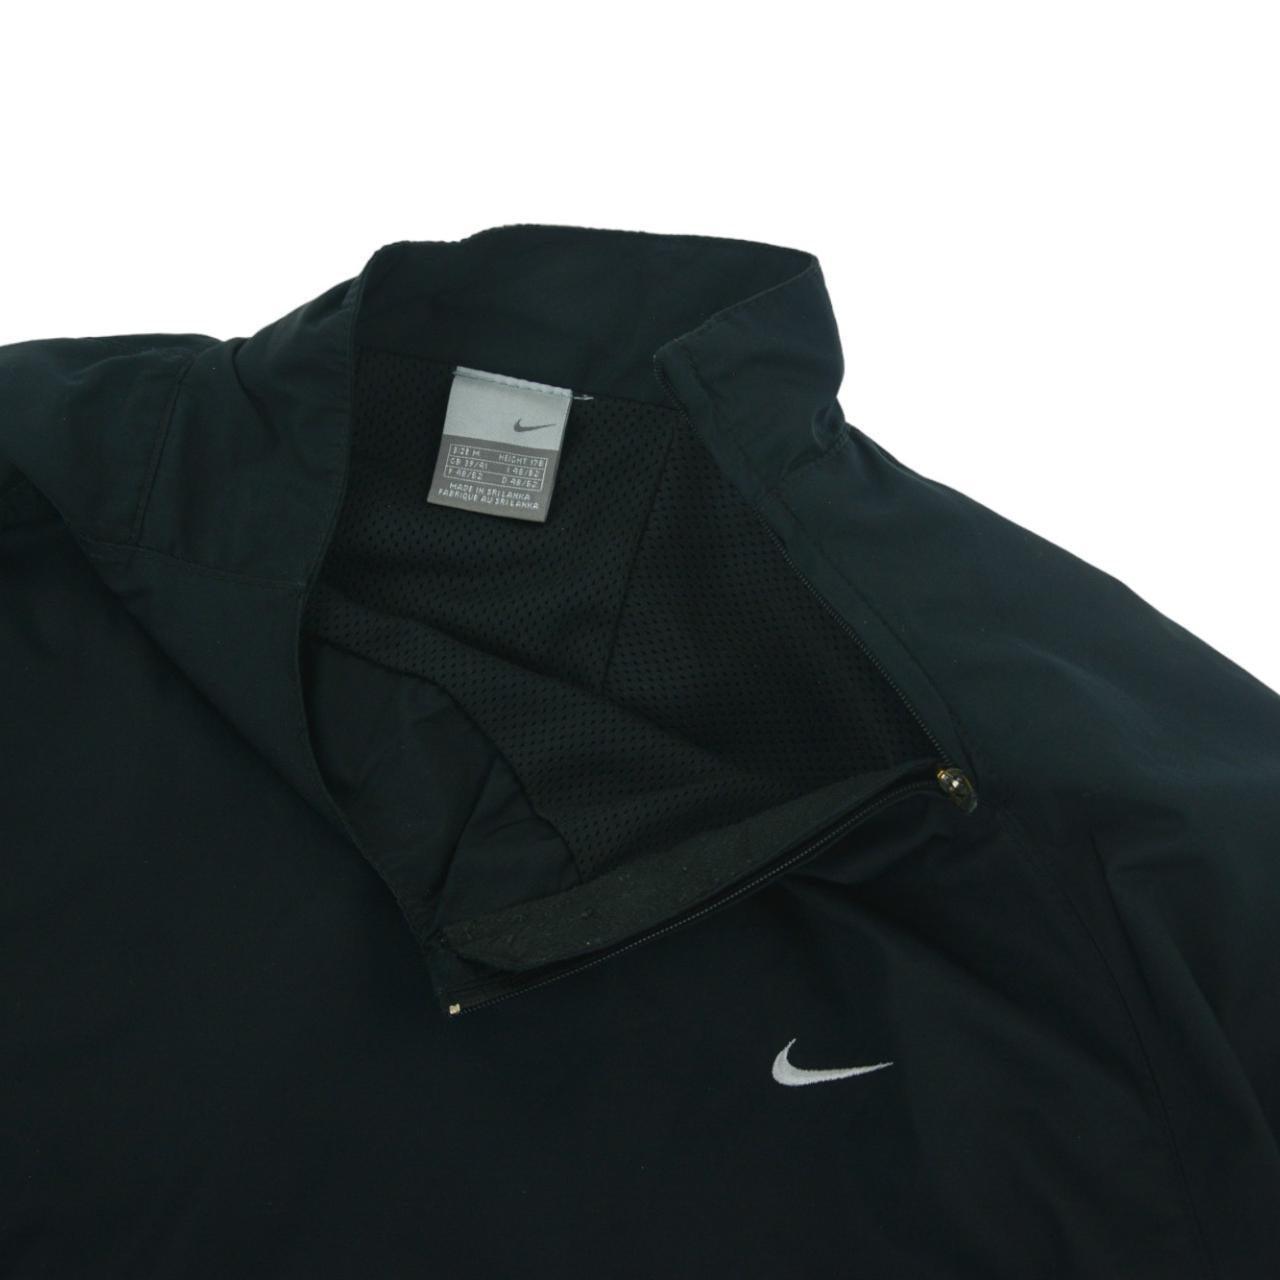 Vintage Nike Asymmetric Neck Zip Jacket with Asymmetrical Zip Size M - Known Source